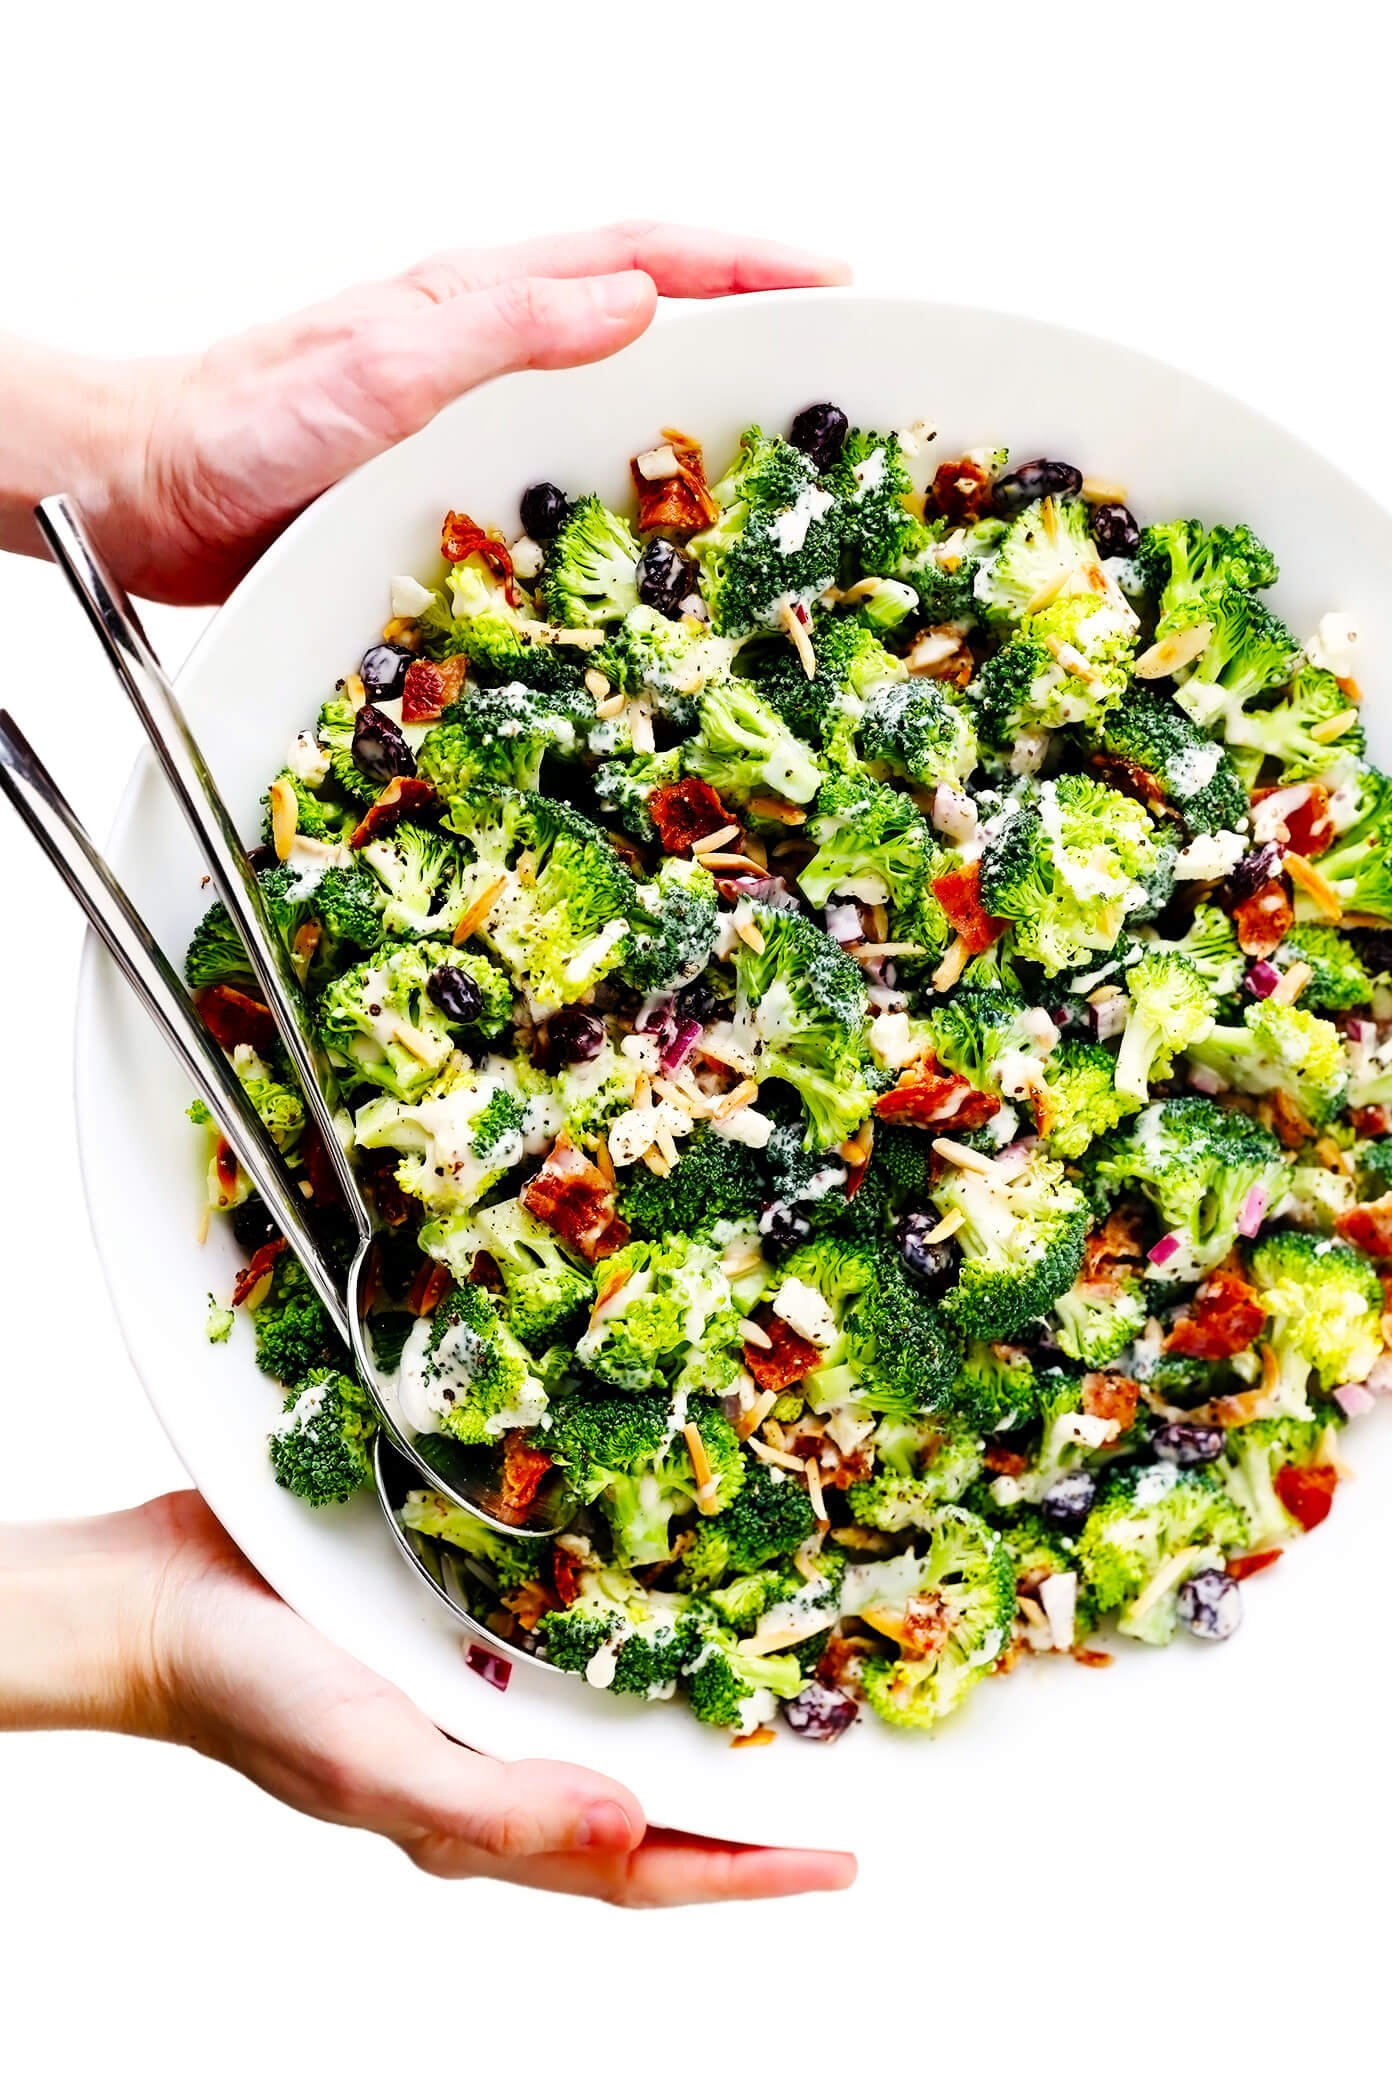 Bowl of broccoli salad with bacon